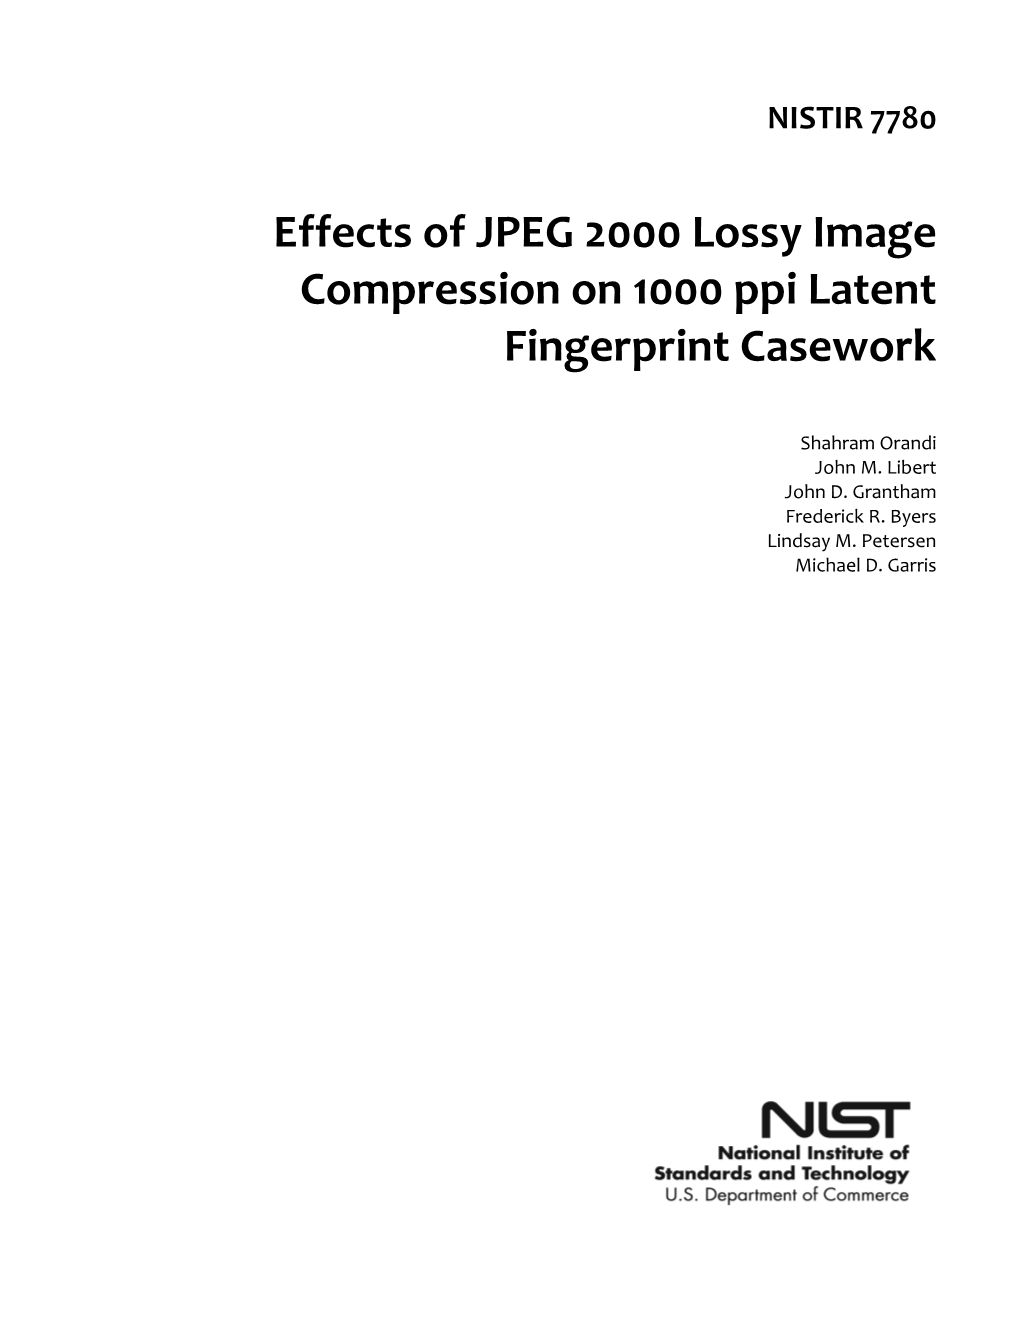 Effects of JPEG 2000 Lossy Image Compression on 1000 Ppi Latent Fingerprint Casework